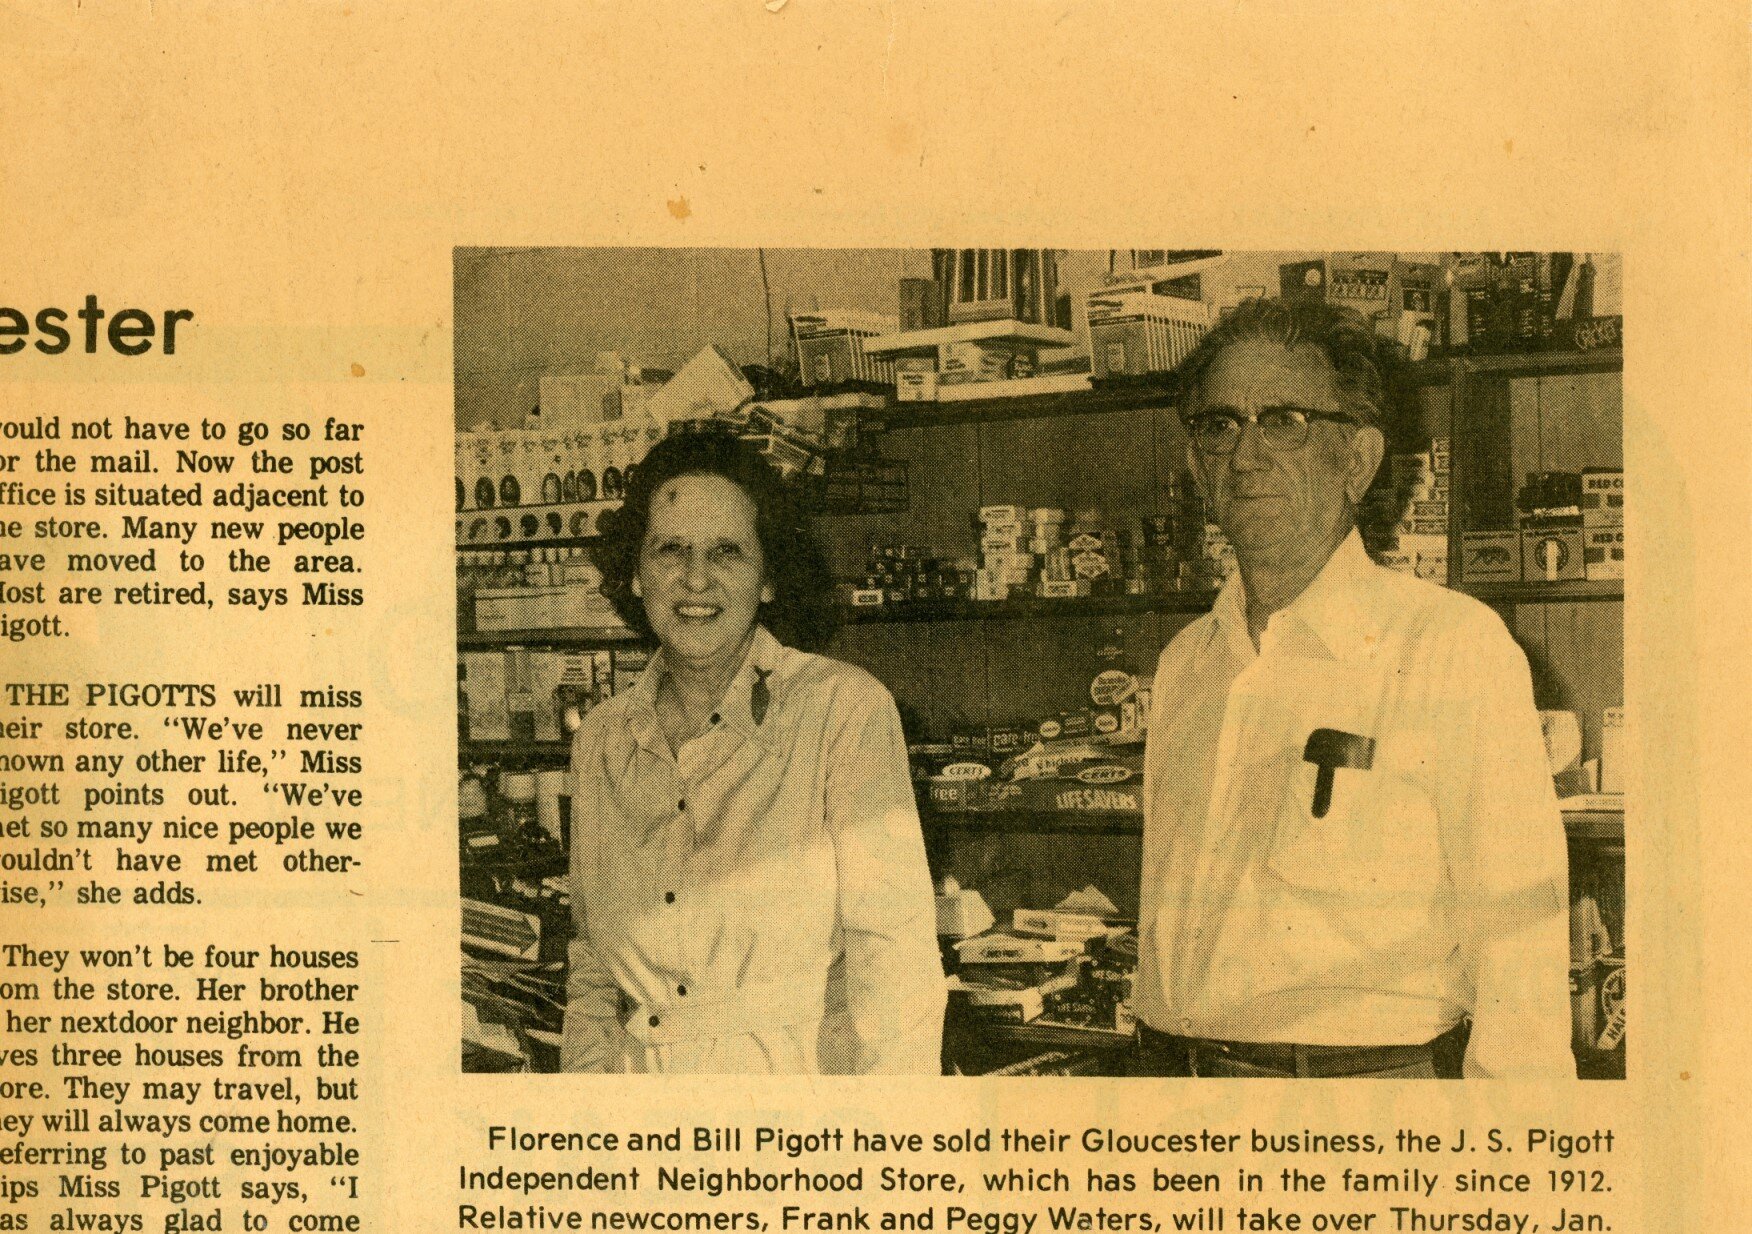 Newspaper article about Florence Pigott and Bill Pigott, owners of JS Pigott Independent Neighborhood Store